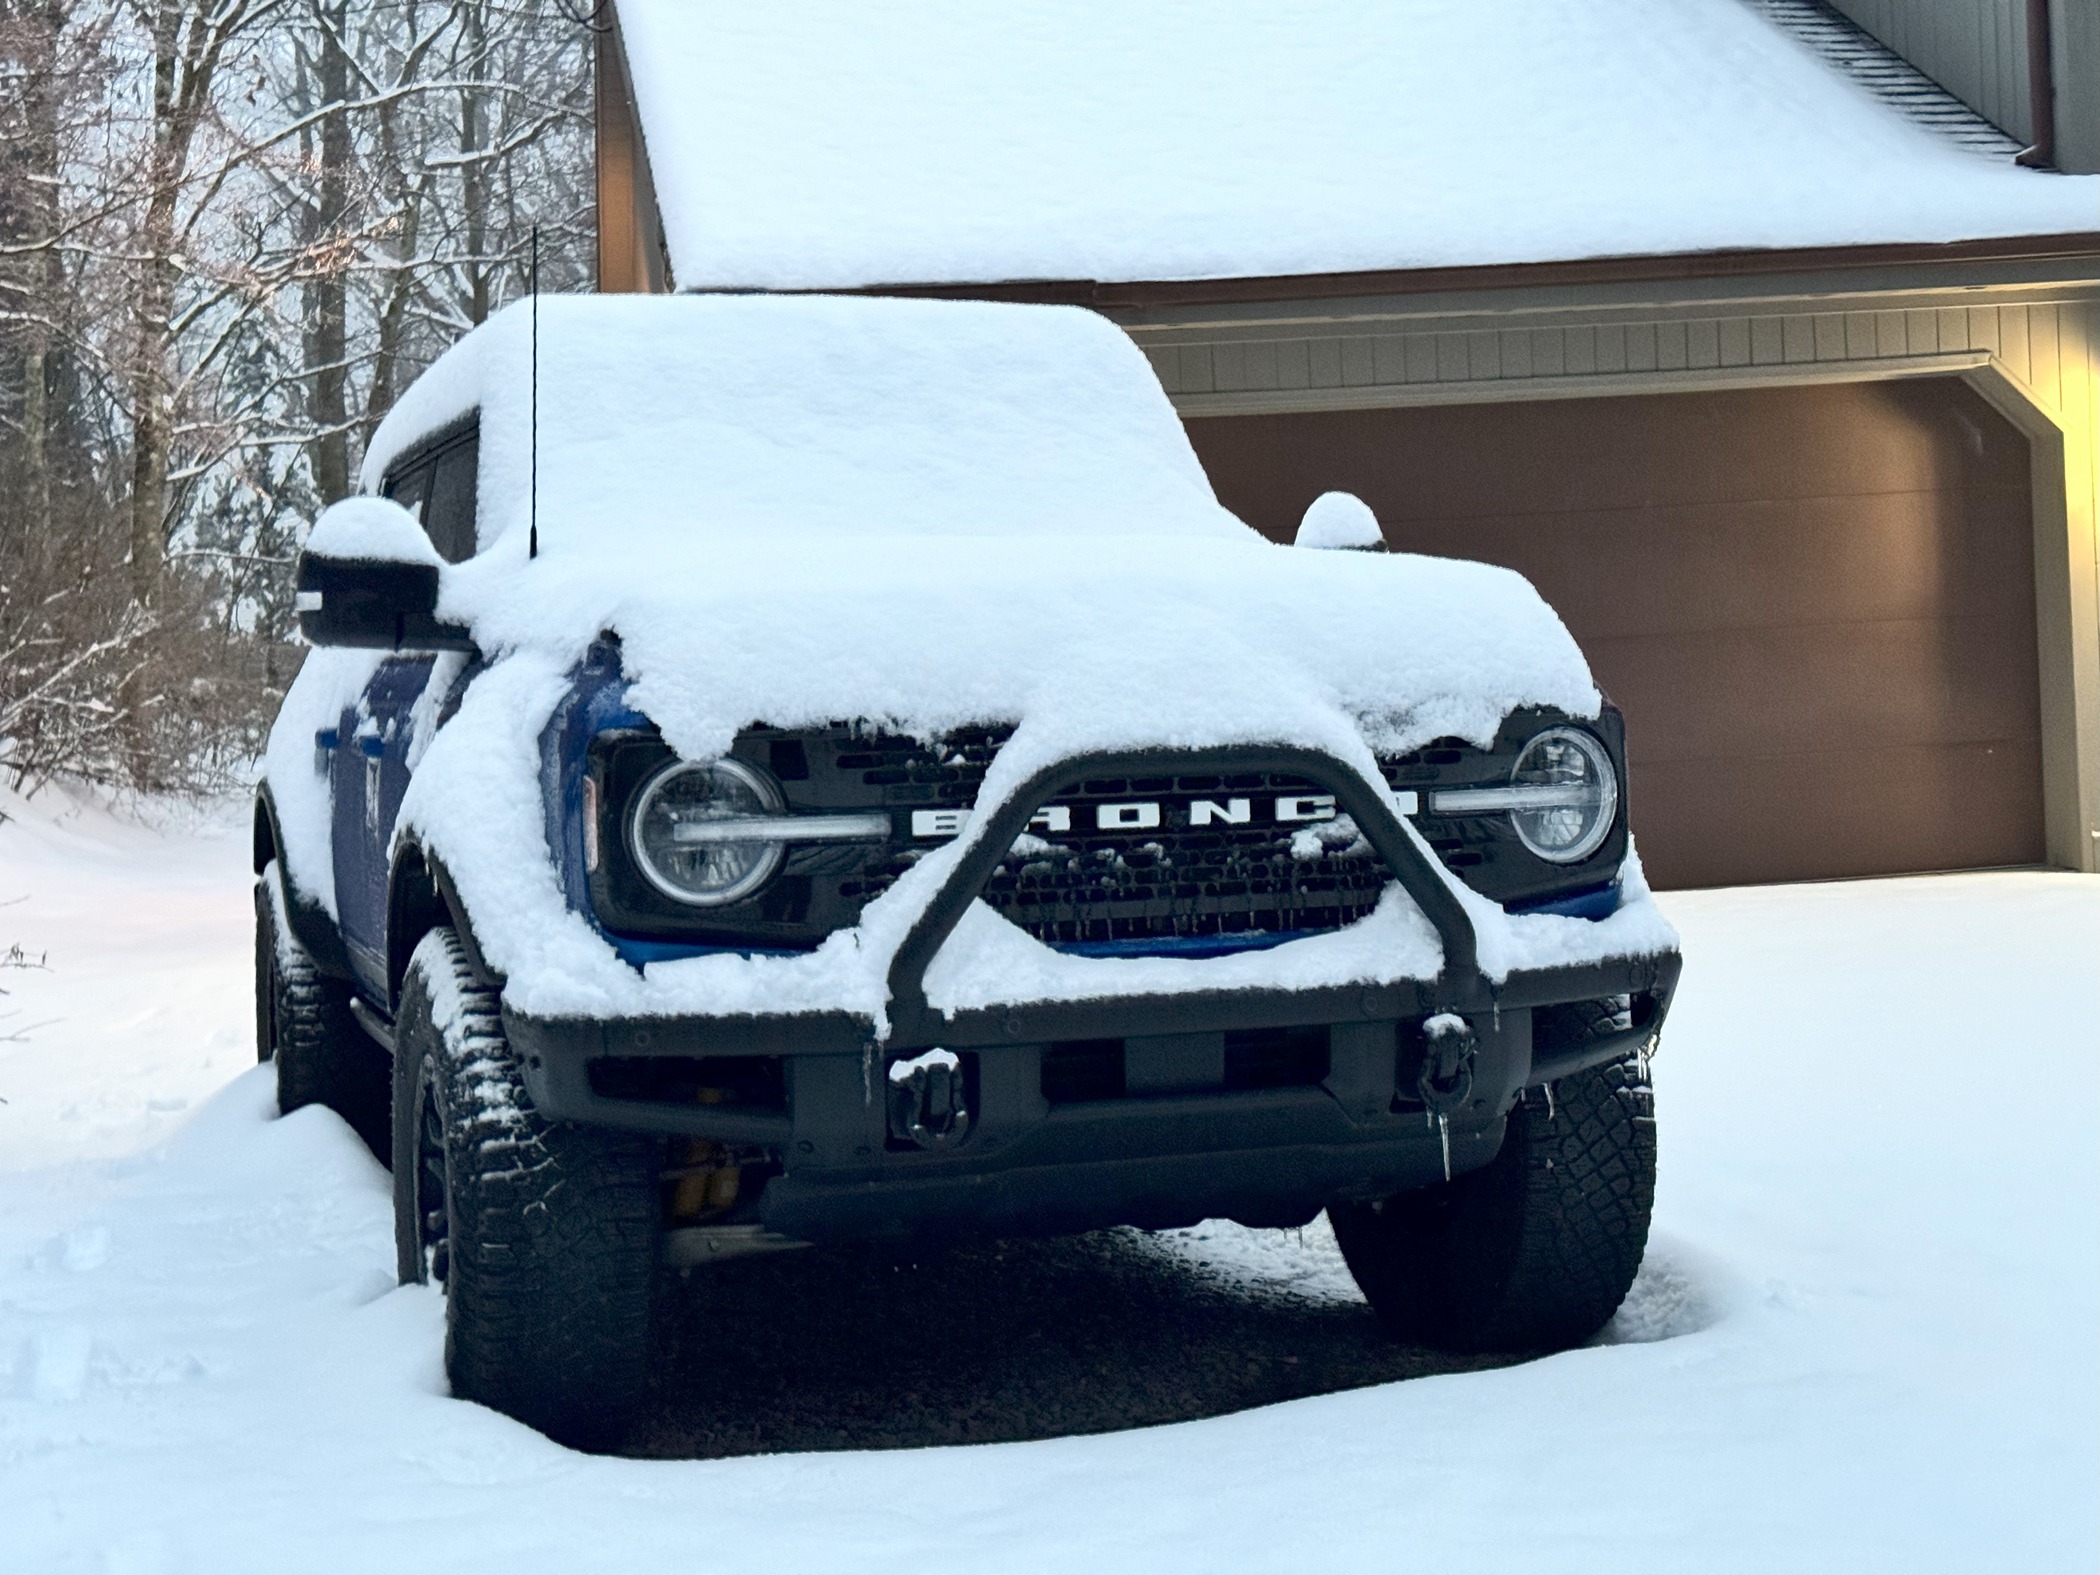 Ford Bronco ❄️❄️❄️❄️ Snow Day Saturday ❄️❄️❄️❄️❄️ IMG_3097